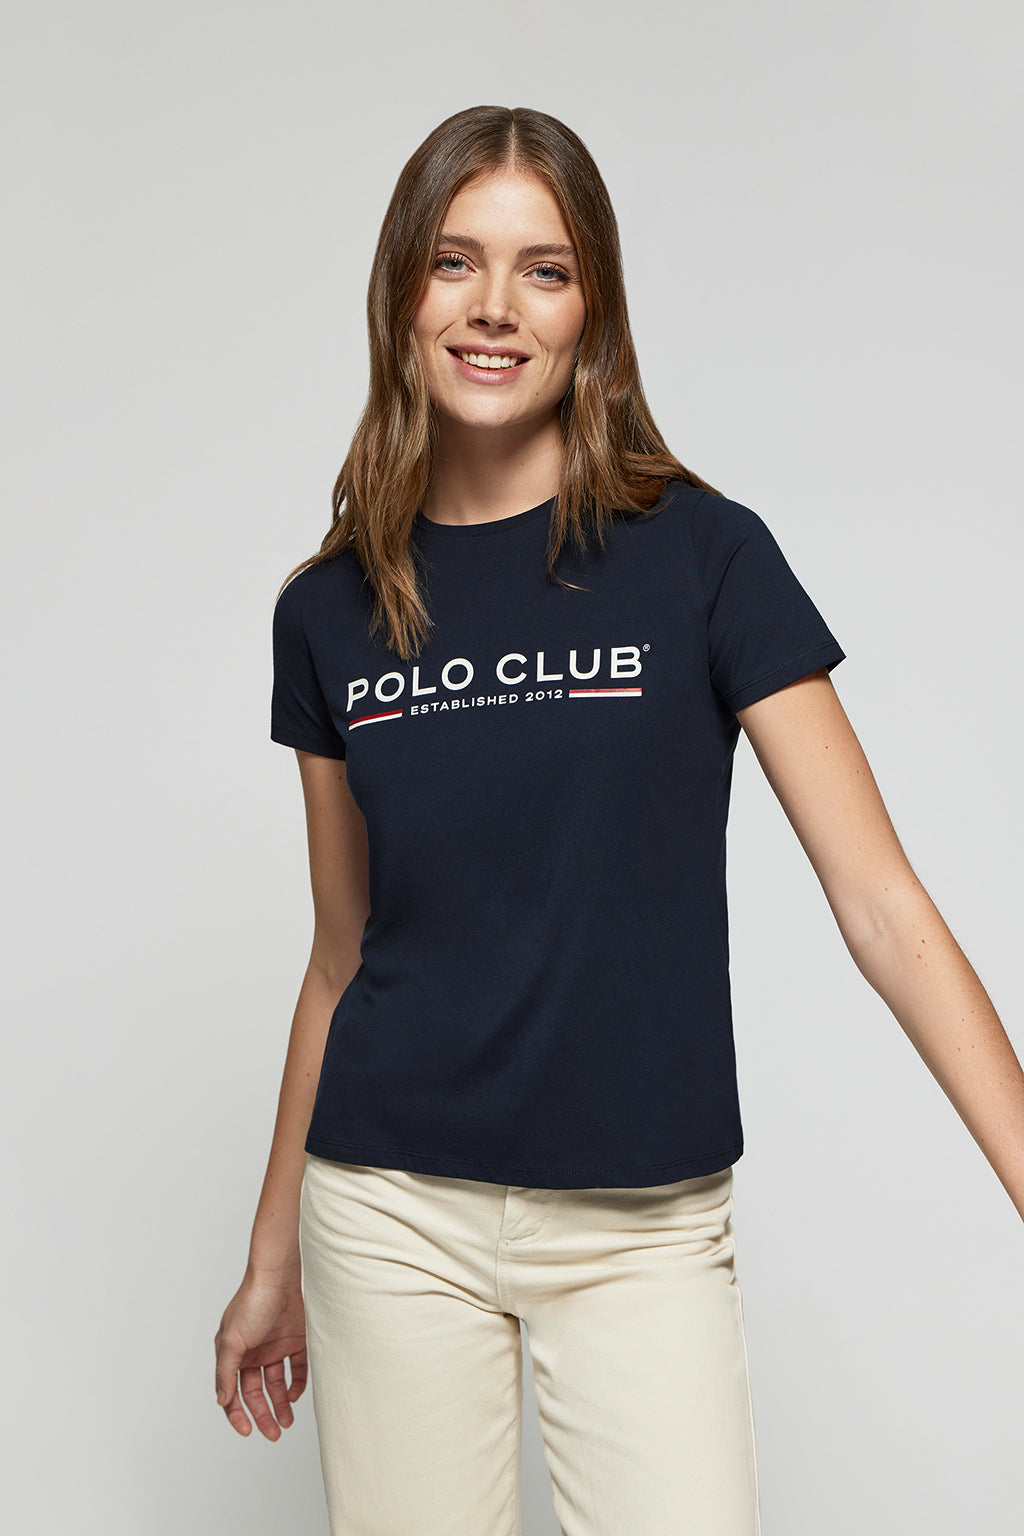 Camiseta básica blanca para mujer – Polo Club